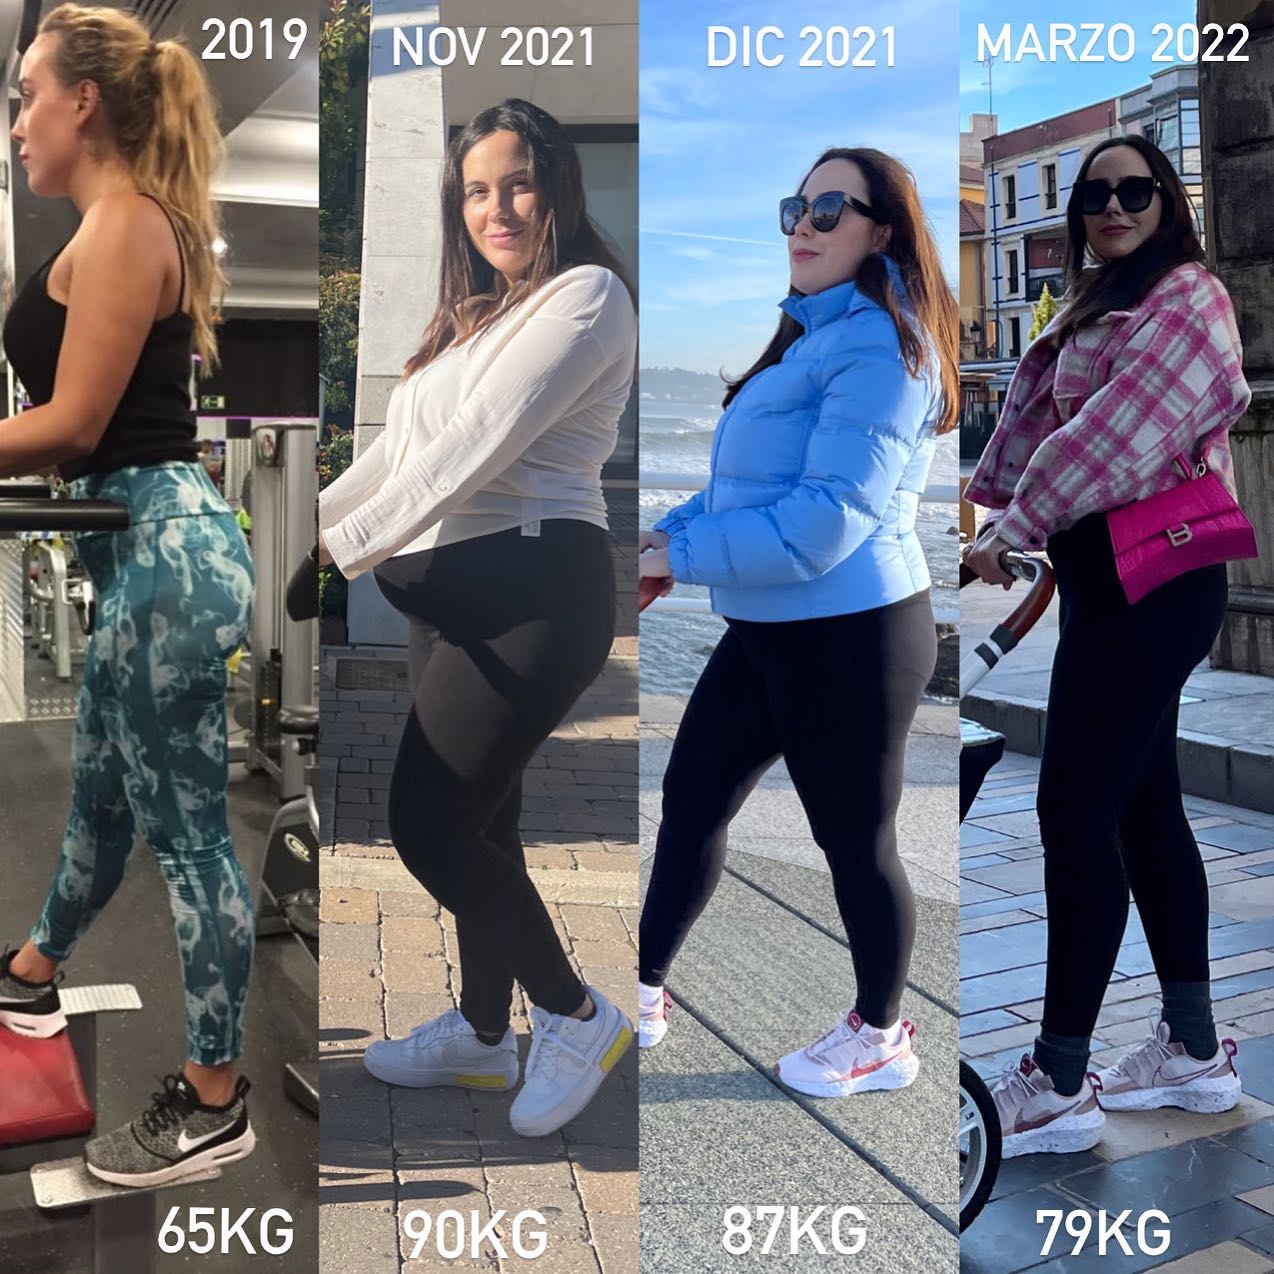 ivana hermana georgina rodriguez perder 21 kilos 1